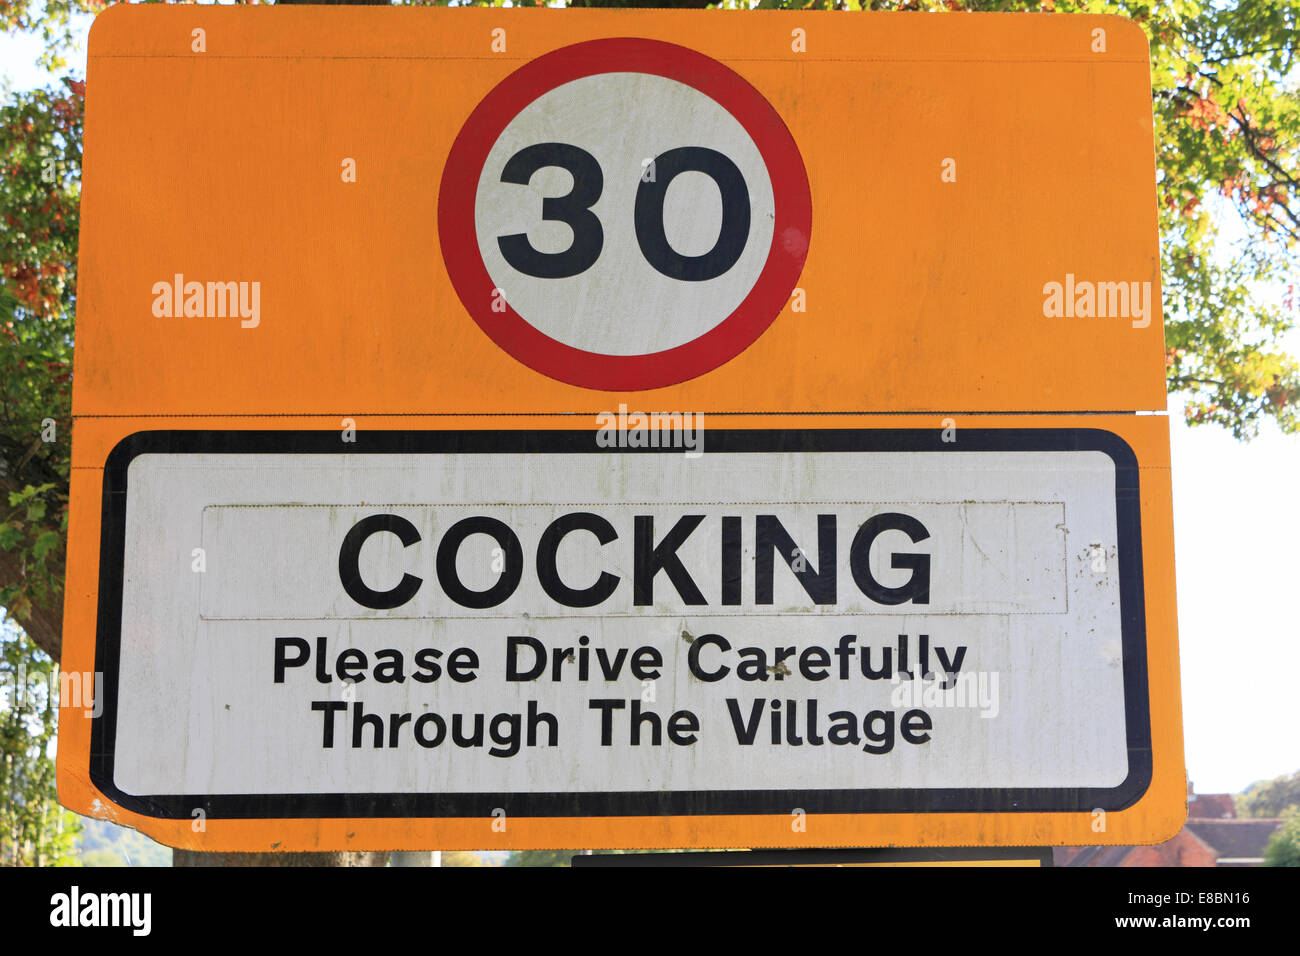 cocking-village-sign-west-sussex-england-uk-E8BN16.jpg